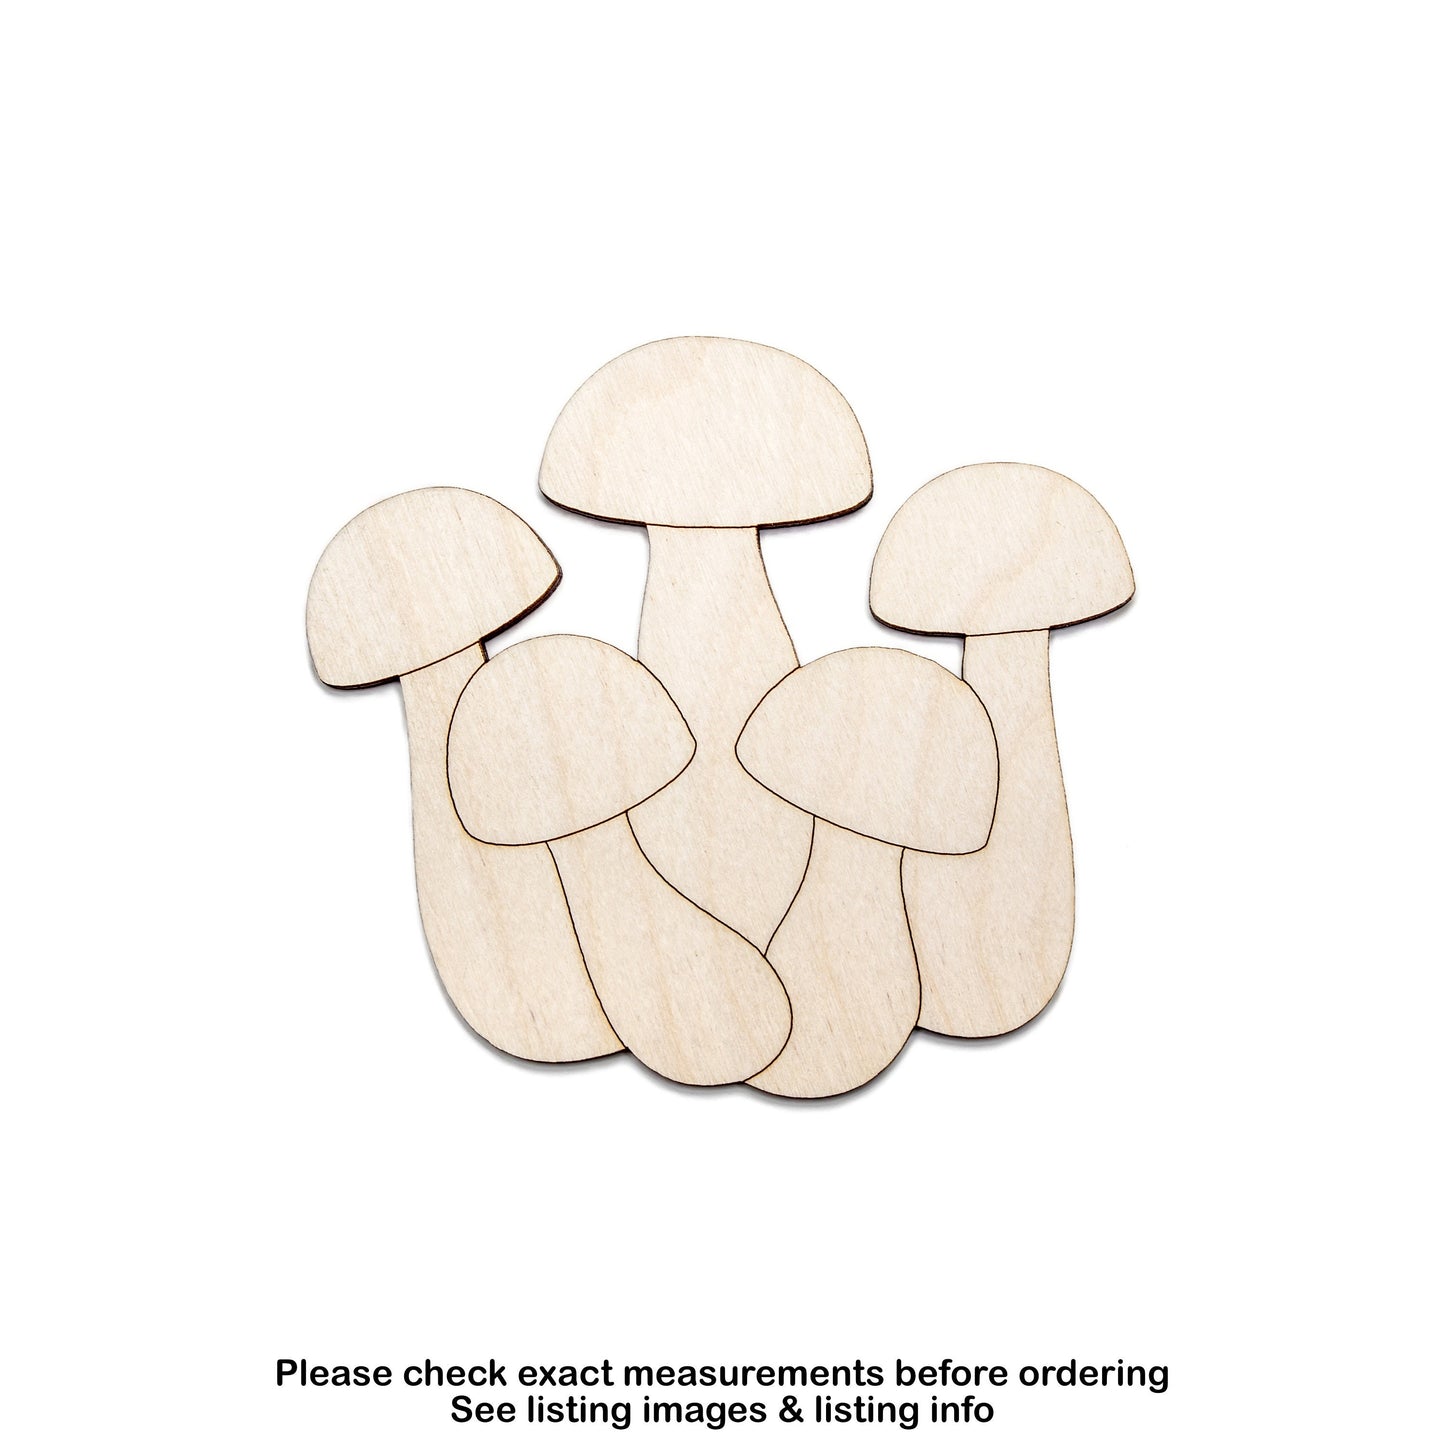 Mushroom Bunch-Wood Cutout-Porcini Mushrooms-Fungus Theme Decor-Various Sizes-DIY Crafts-Nature Decor-Unfinished Wood Cuts-Mushroom Shapes